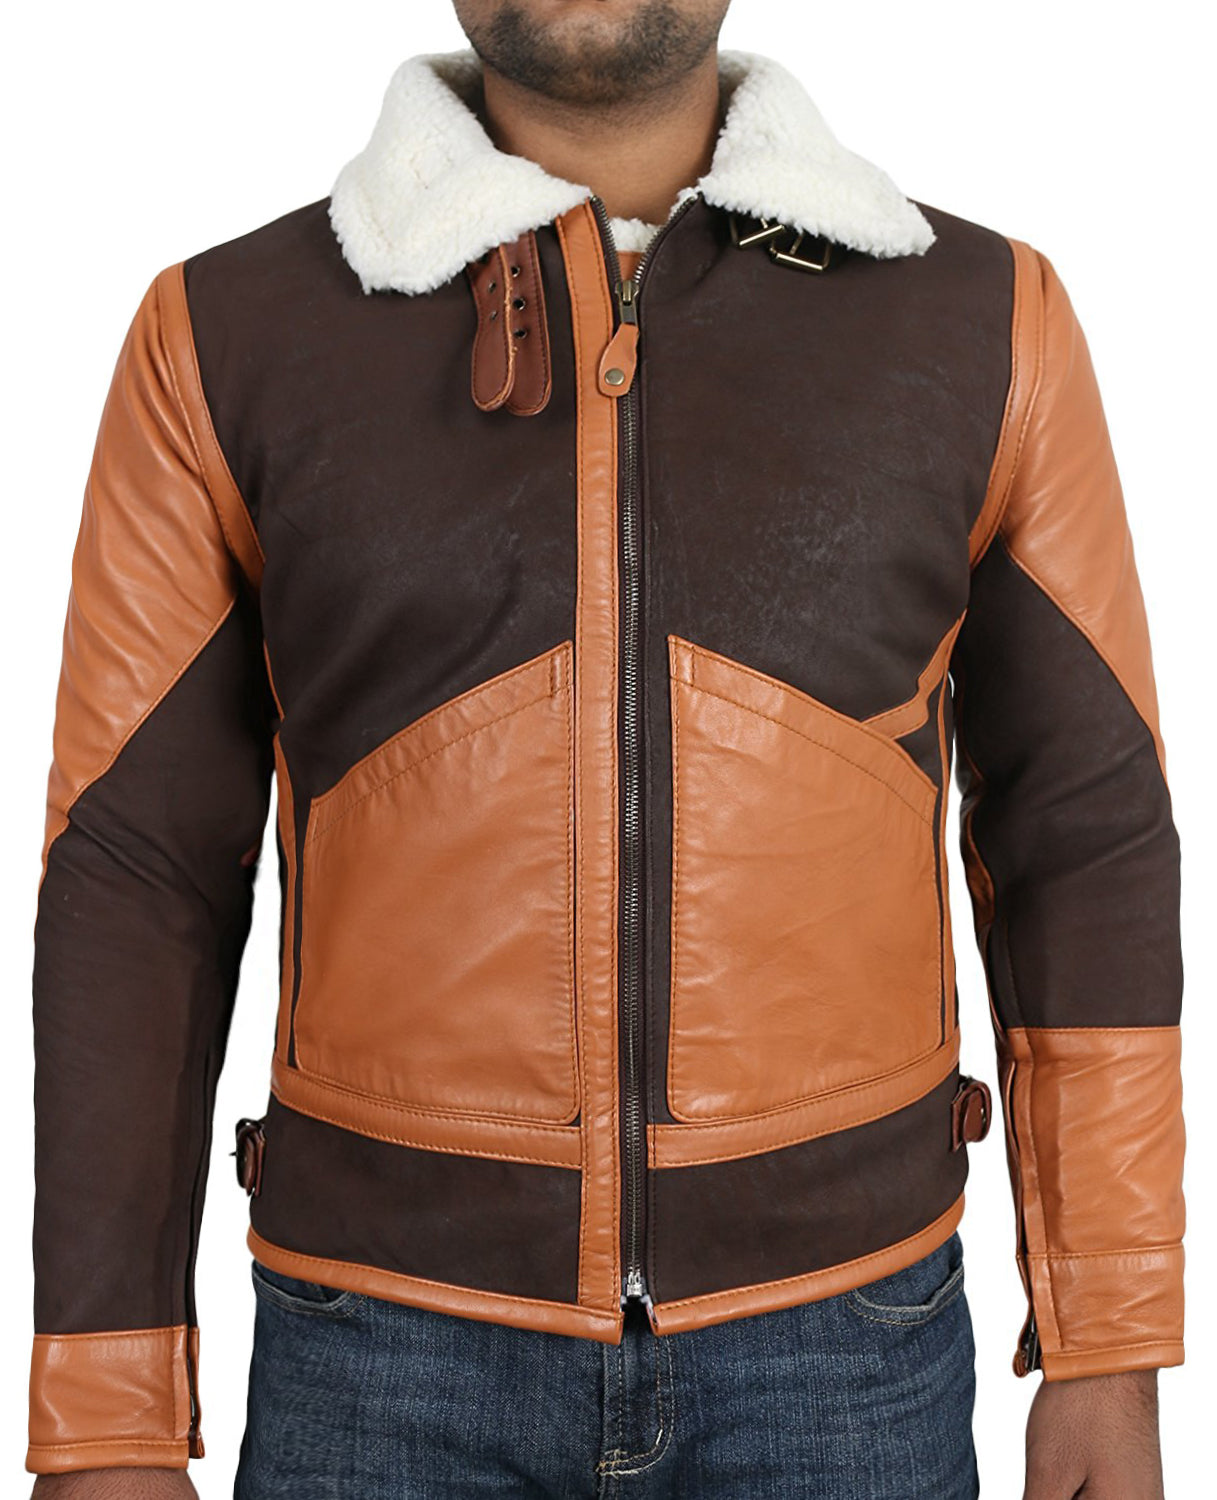 Leather Jackets Hub Mens Genuine Lambskin Leather Jacket (Cognic Tan-Choco-Snaff, Flight Jacket) - 1701024